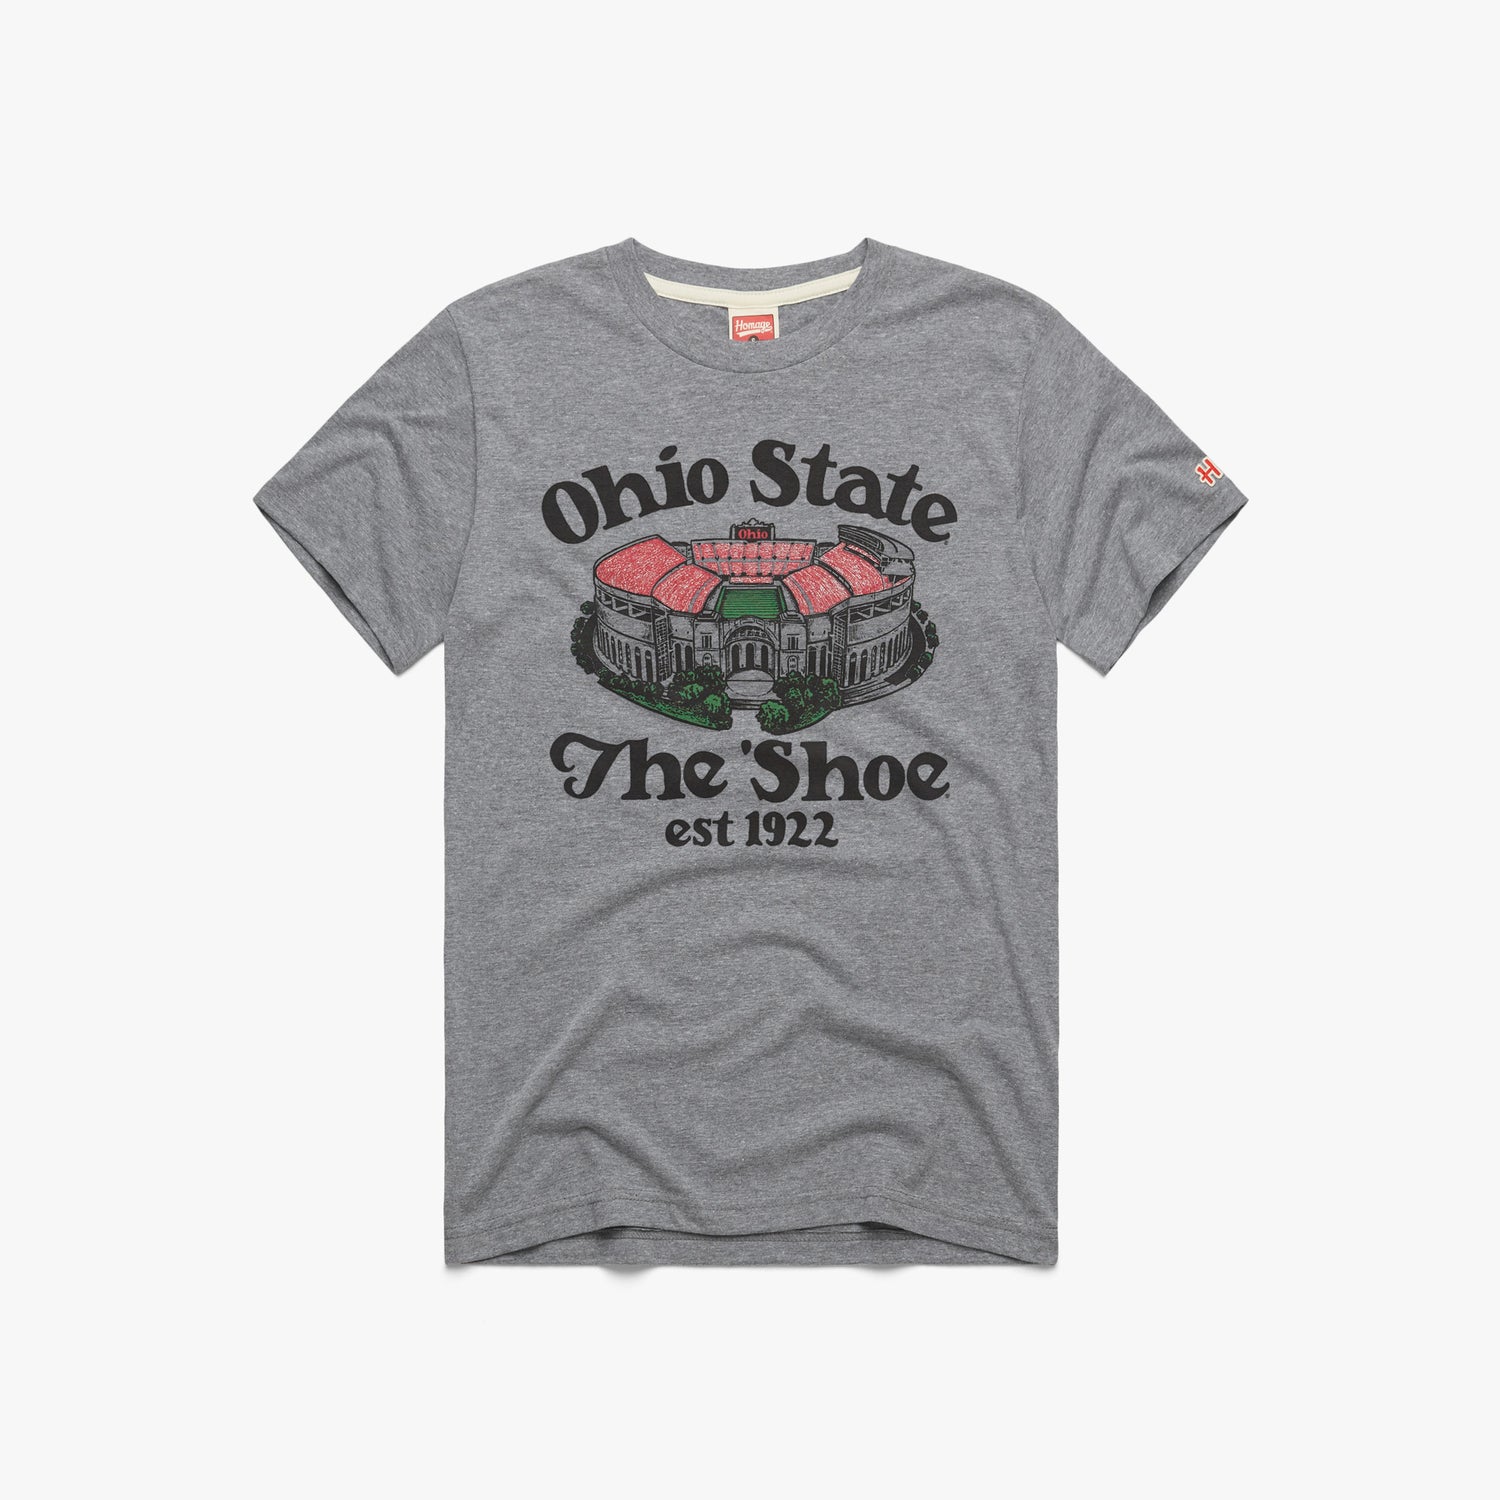 Ohio State The Shoe Est 1922